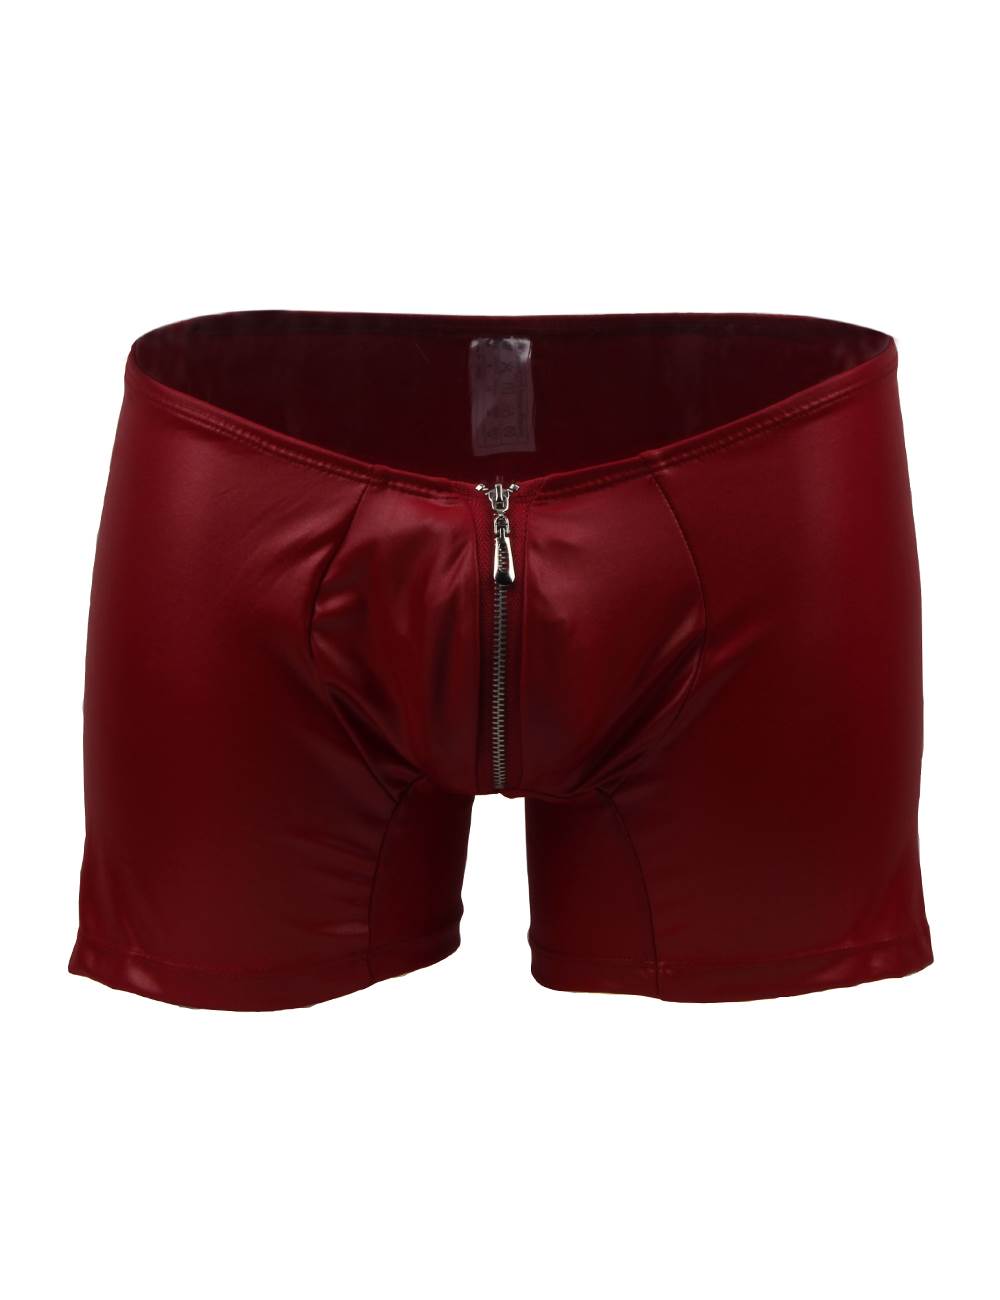 JCSTK -  Mens Wetlook Boxer Shorts with Zipper Pouch Front Burgundy